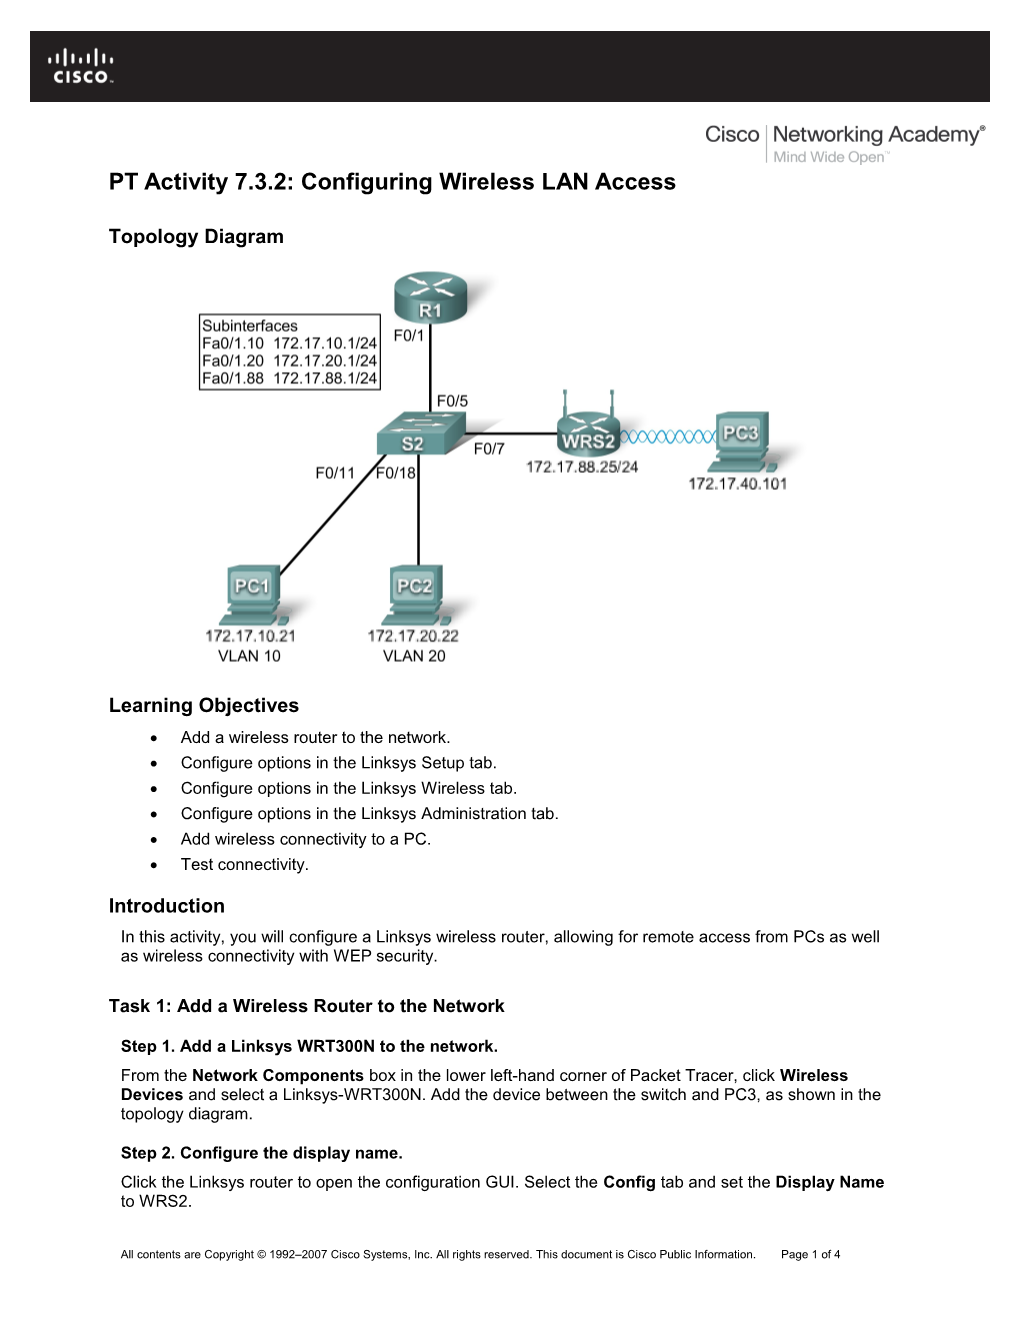 PT Activity 7.3.2: Configuring Wireless LAN Access